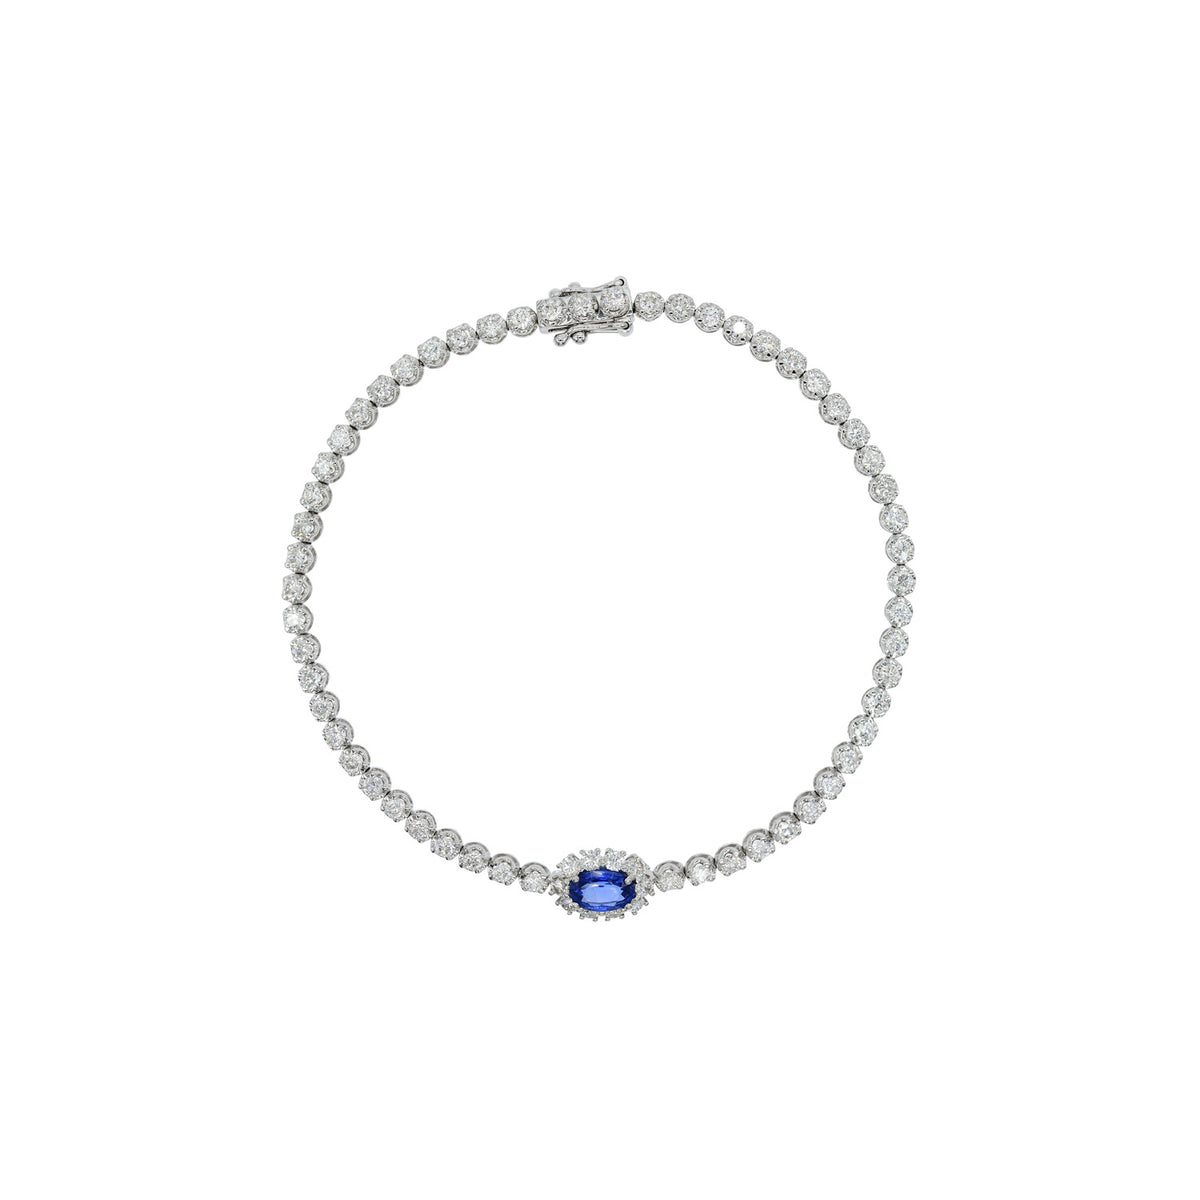 Sapphire and diamond bracelet. Diamond tennis bracelet.